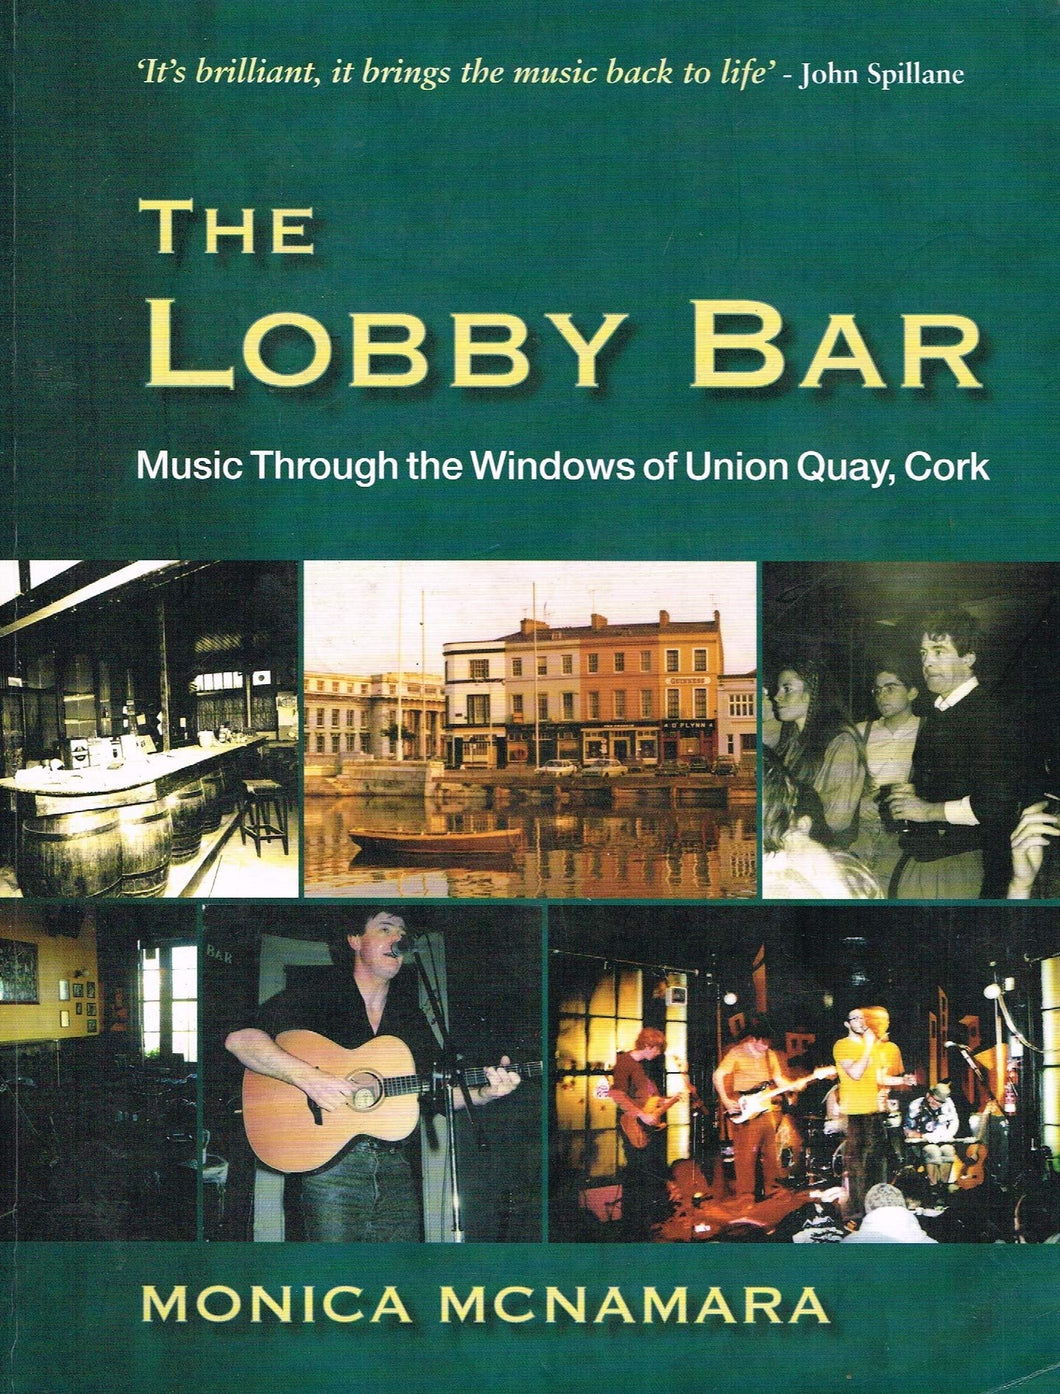 The Lobby Bar - Music Through the Windows of Union Quay, Cork